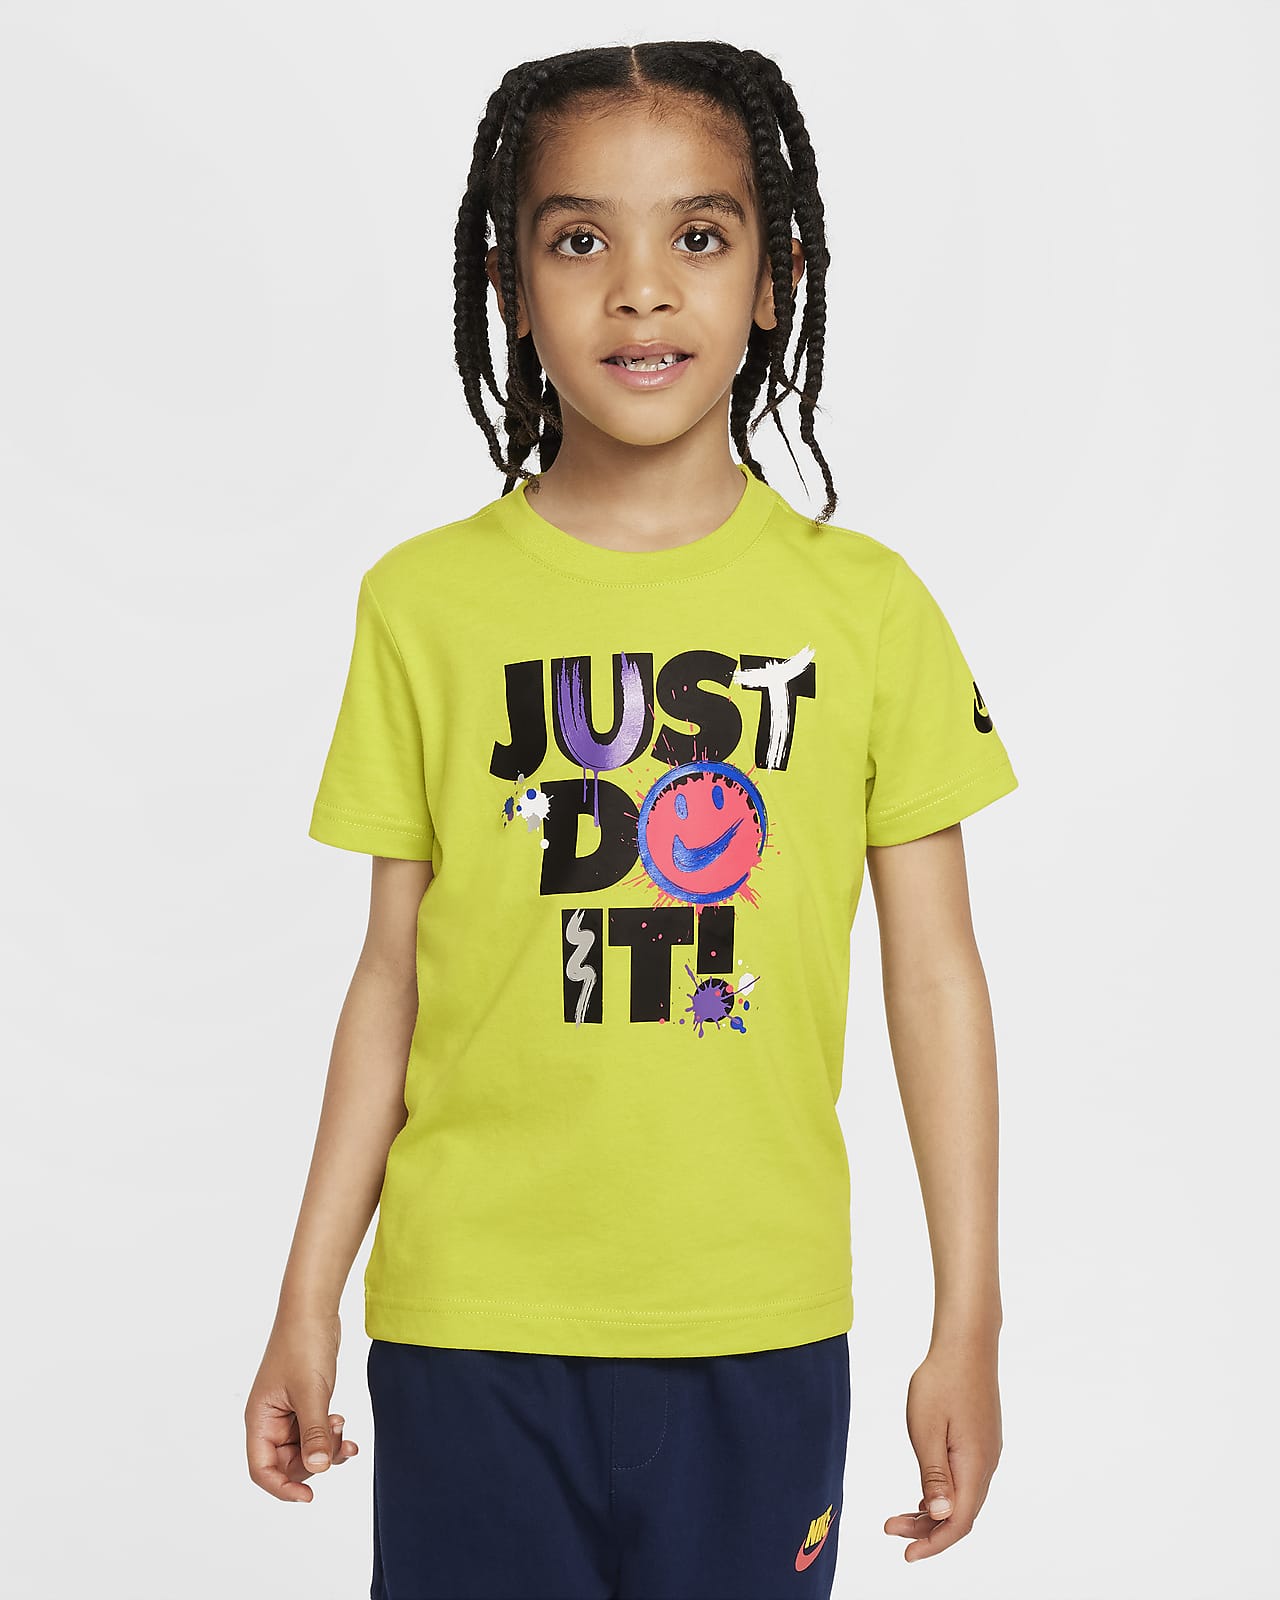 Nike "Express Yourself" Little Kids' "Just Do It" T-Shirt